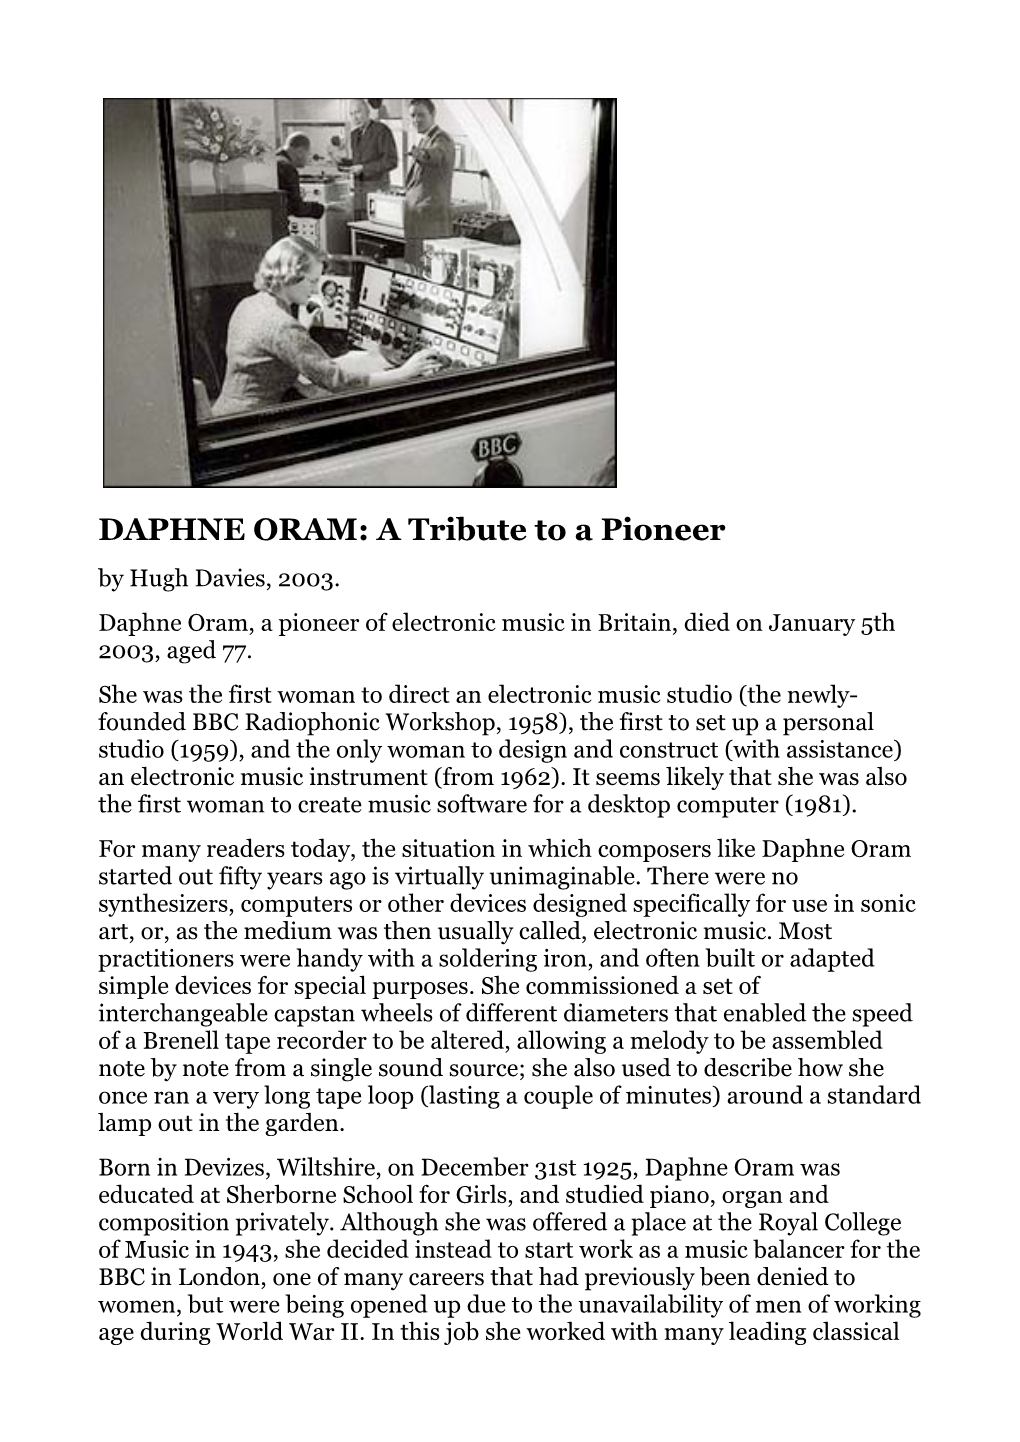 DAPHNE ORAM: a Tribute to a Pioneer by Hugh Davies, 2003